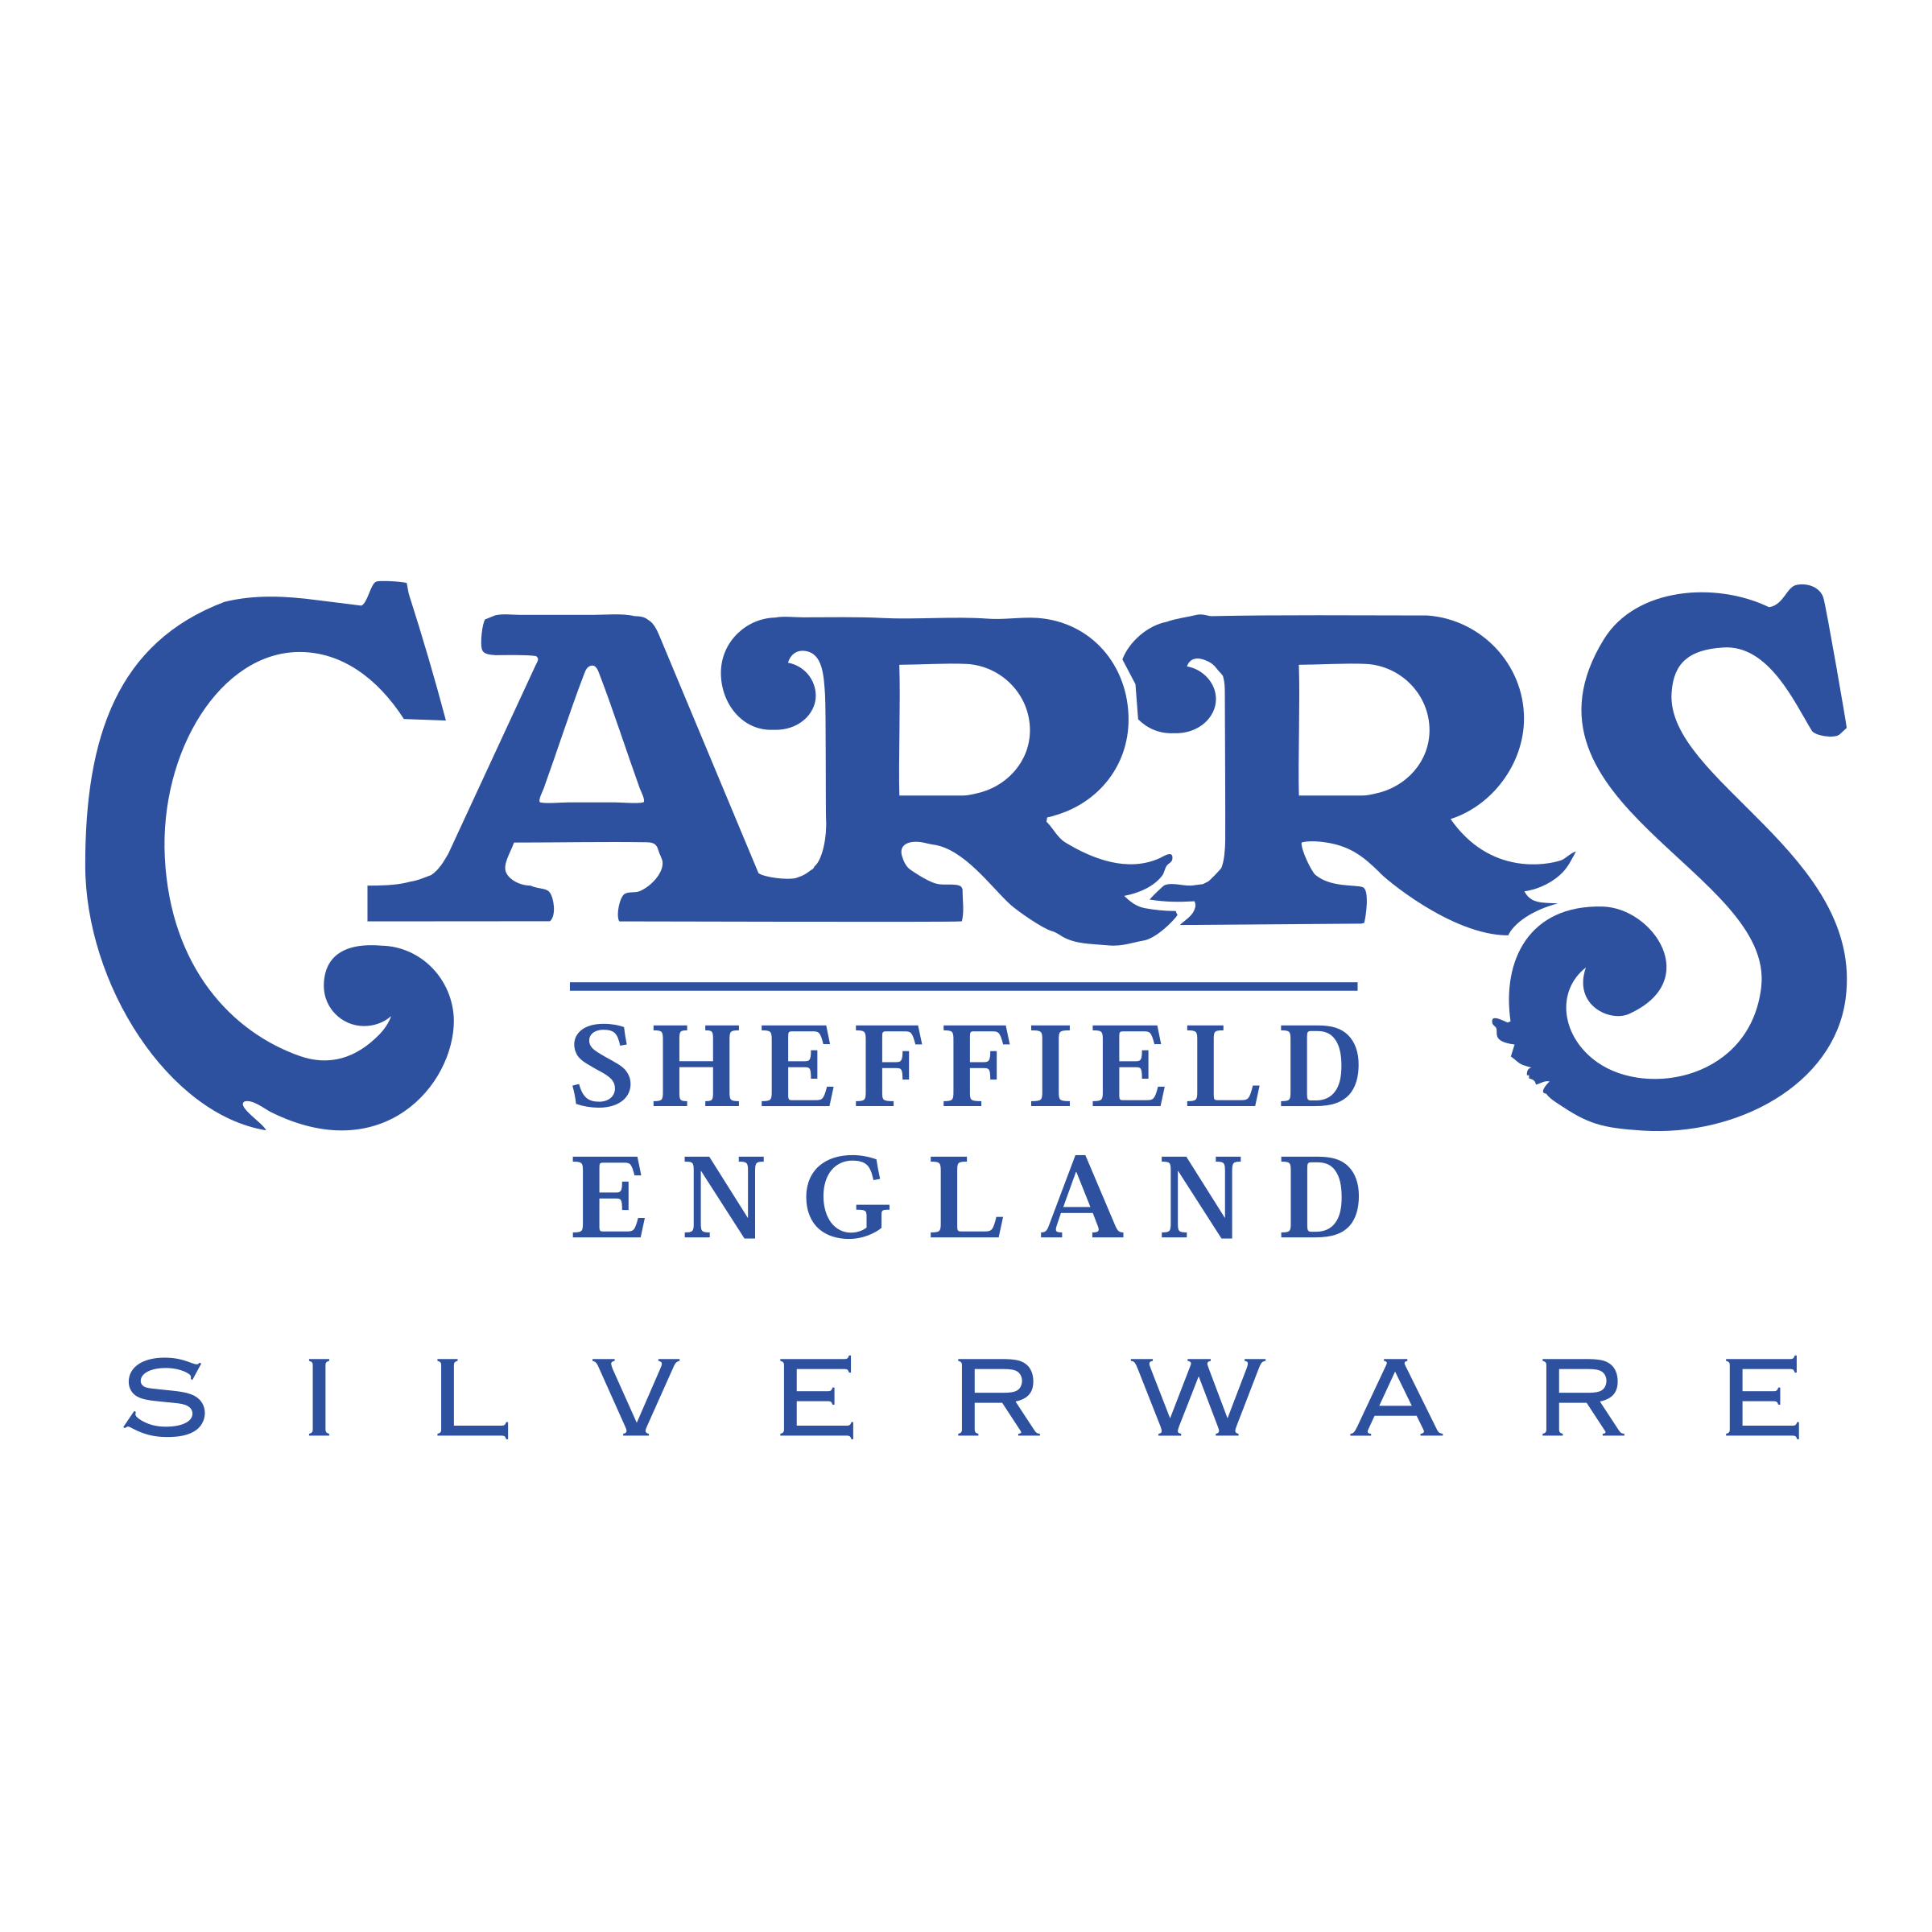 Carr's Logo - Carrs Logo PNG Transparent & SVG Vector - Freebie Supply